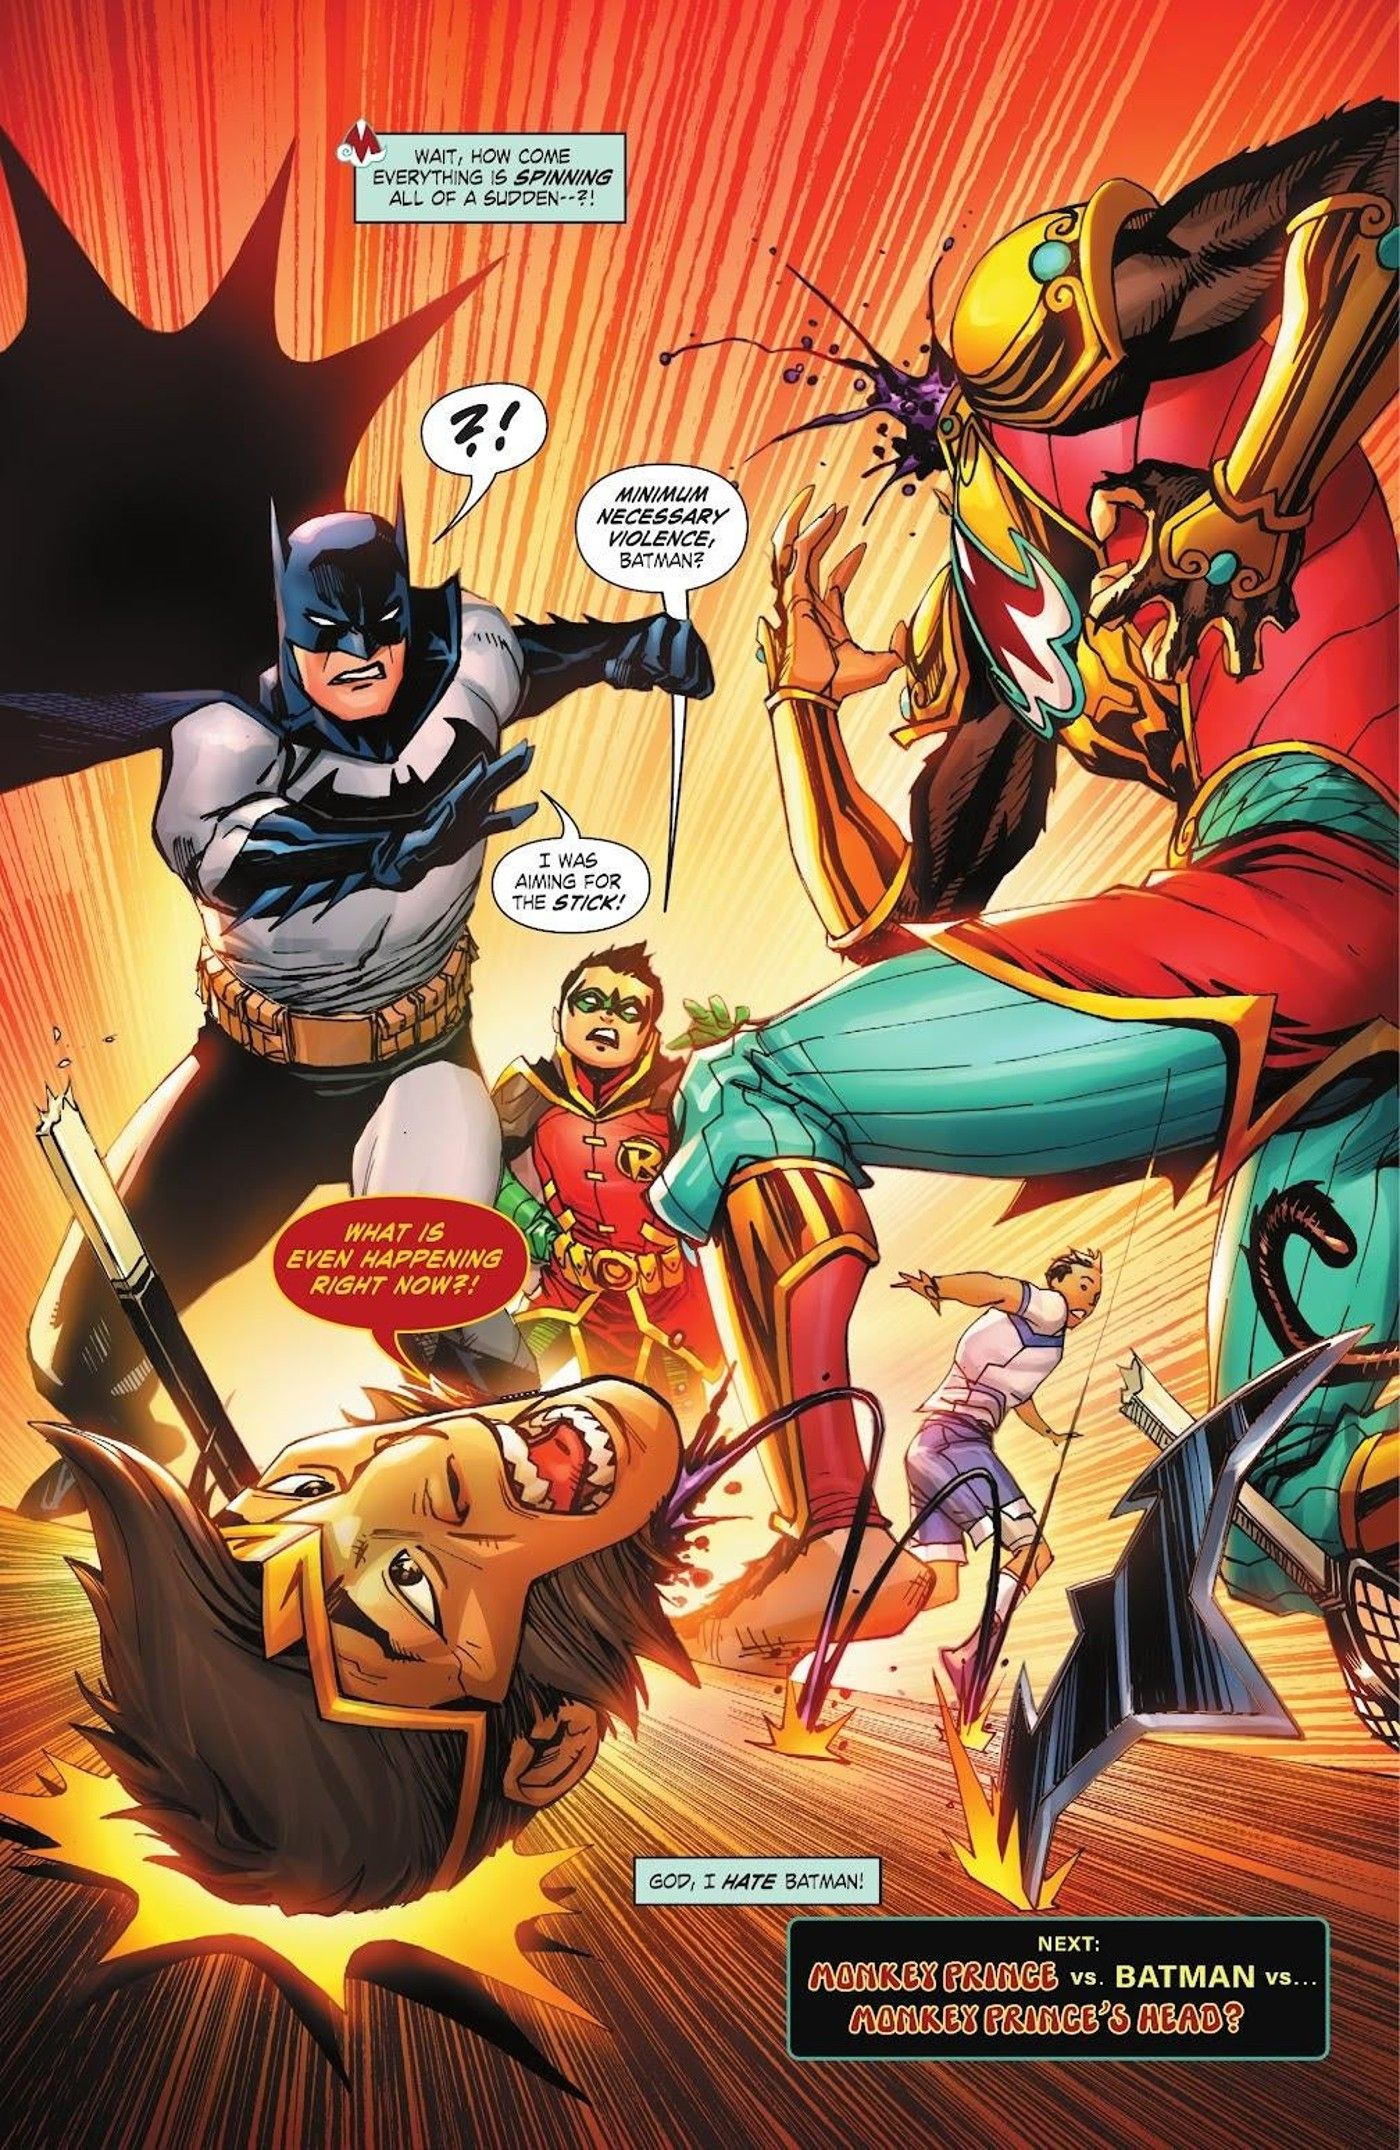 Batman-accidentally-kills-The-Monkey-Prince-in-DC-Comics